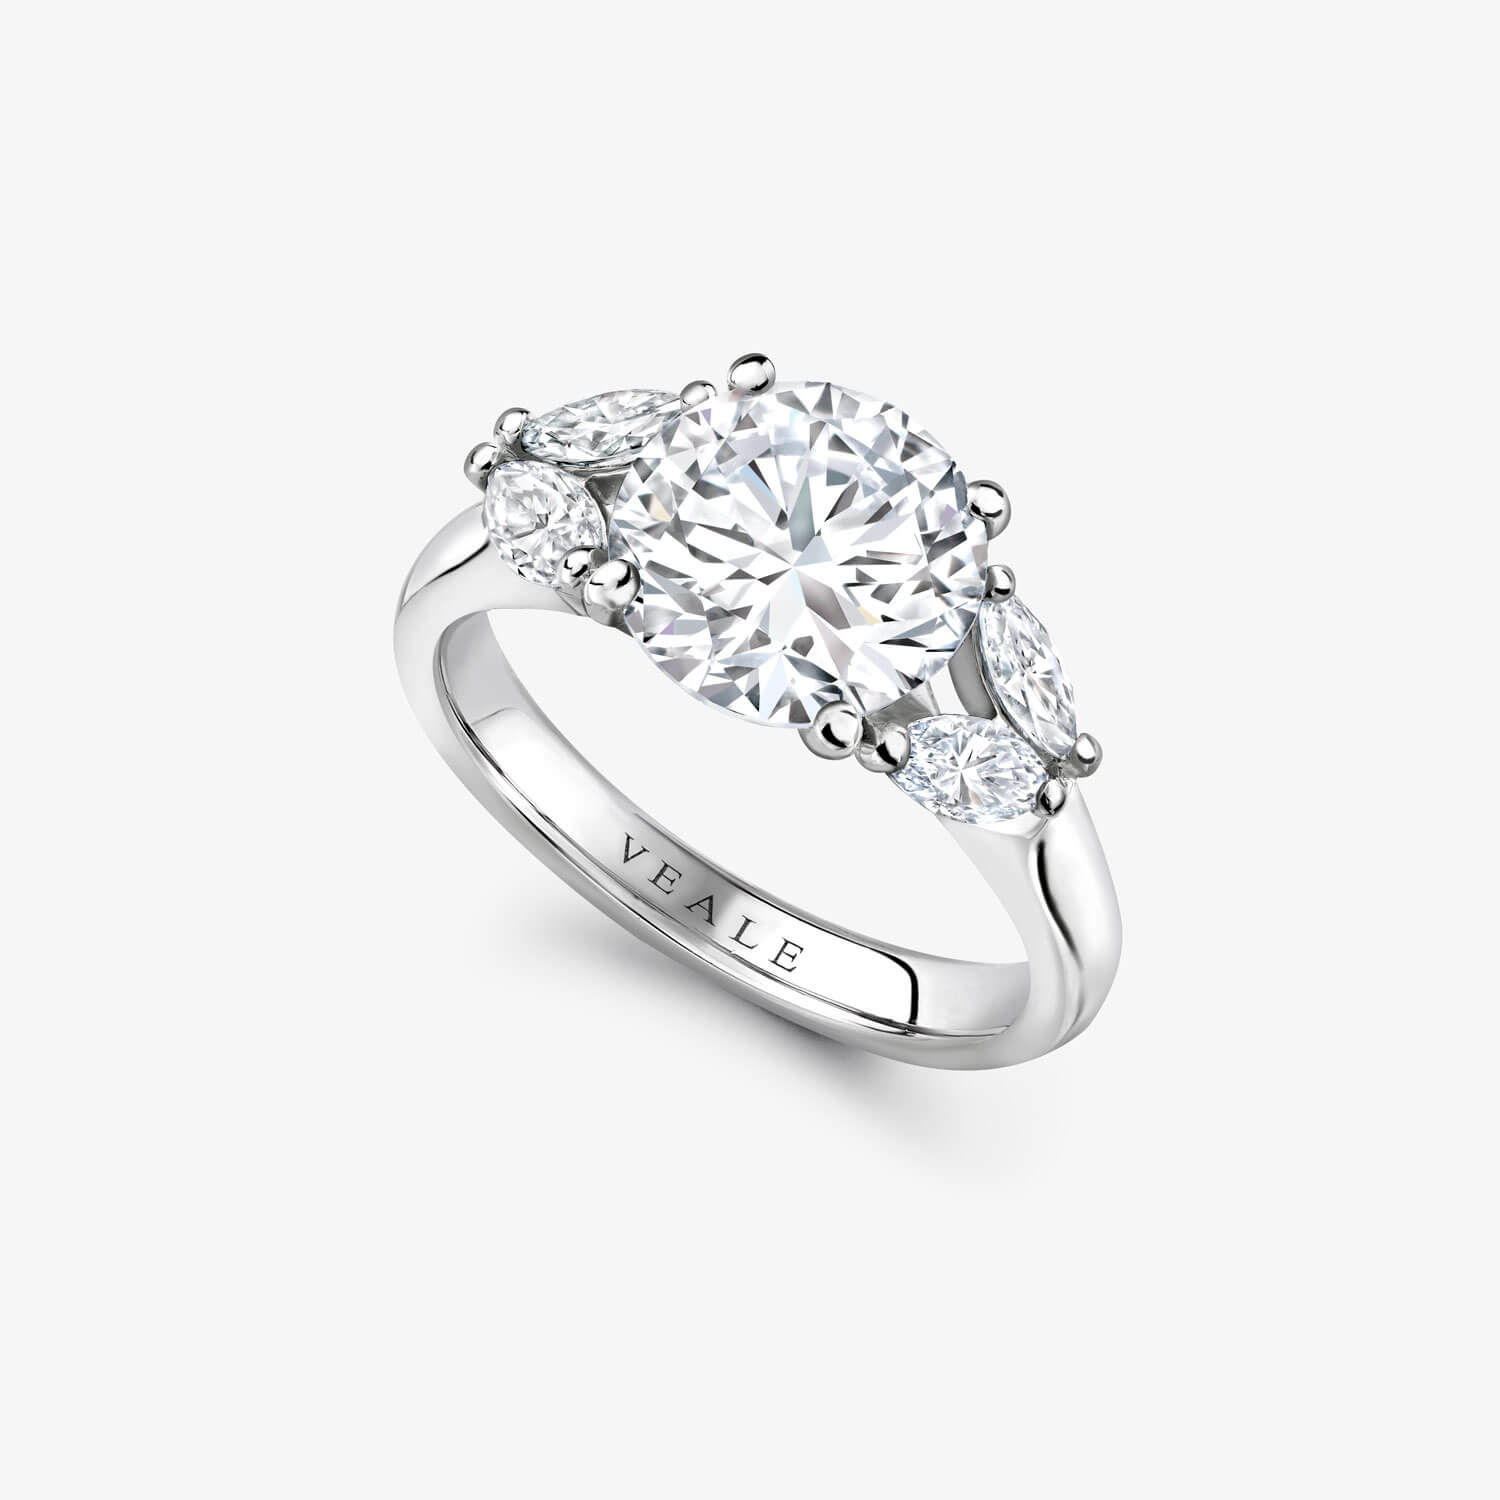 Lisa’s Bespoke Diamond Engagement Ring